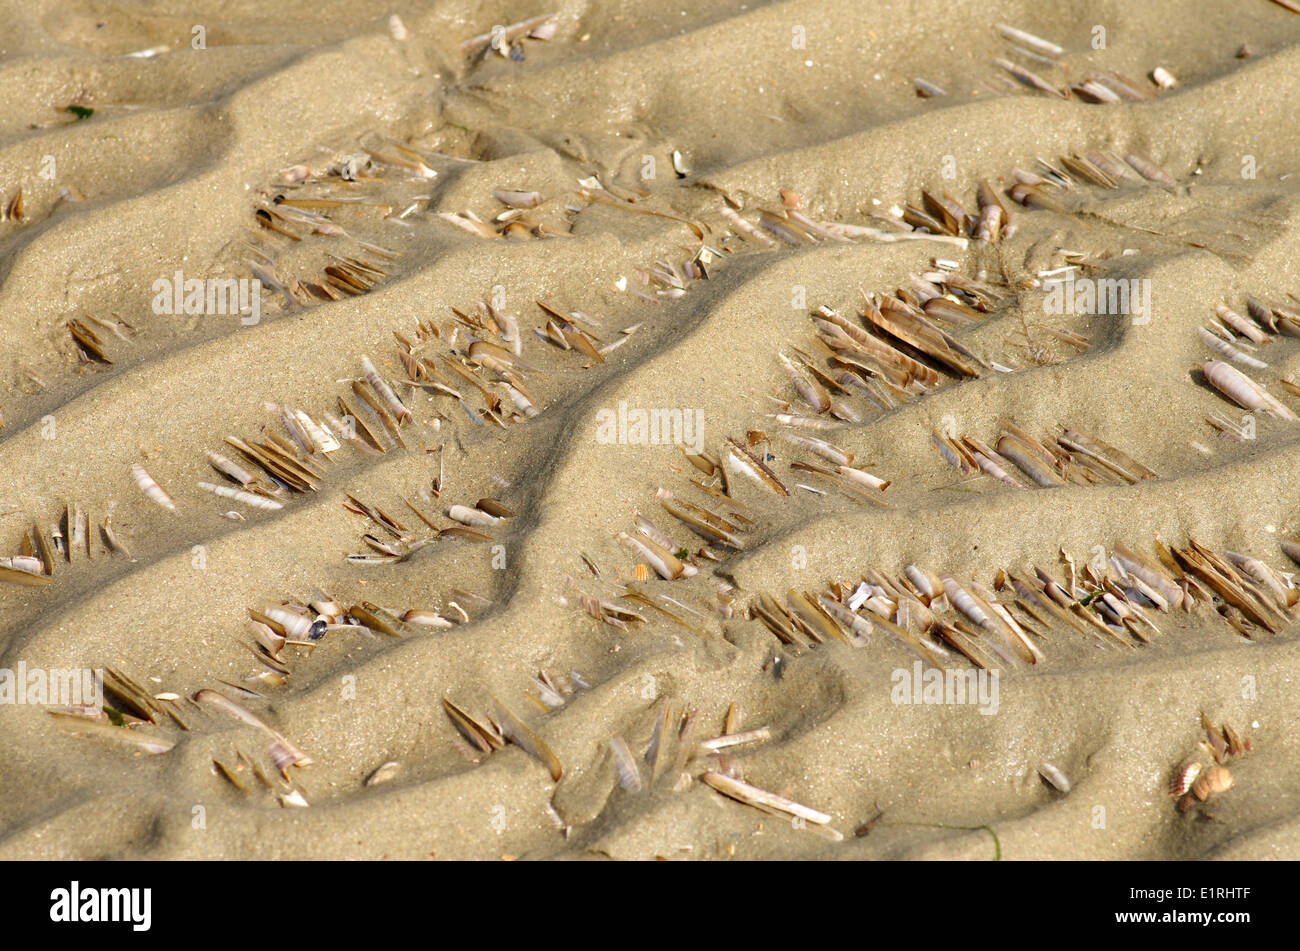 Atlantic jackknifes in die Rippen der Sand am Strand Stockfoto